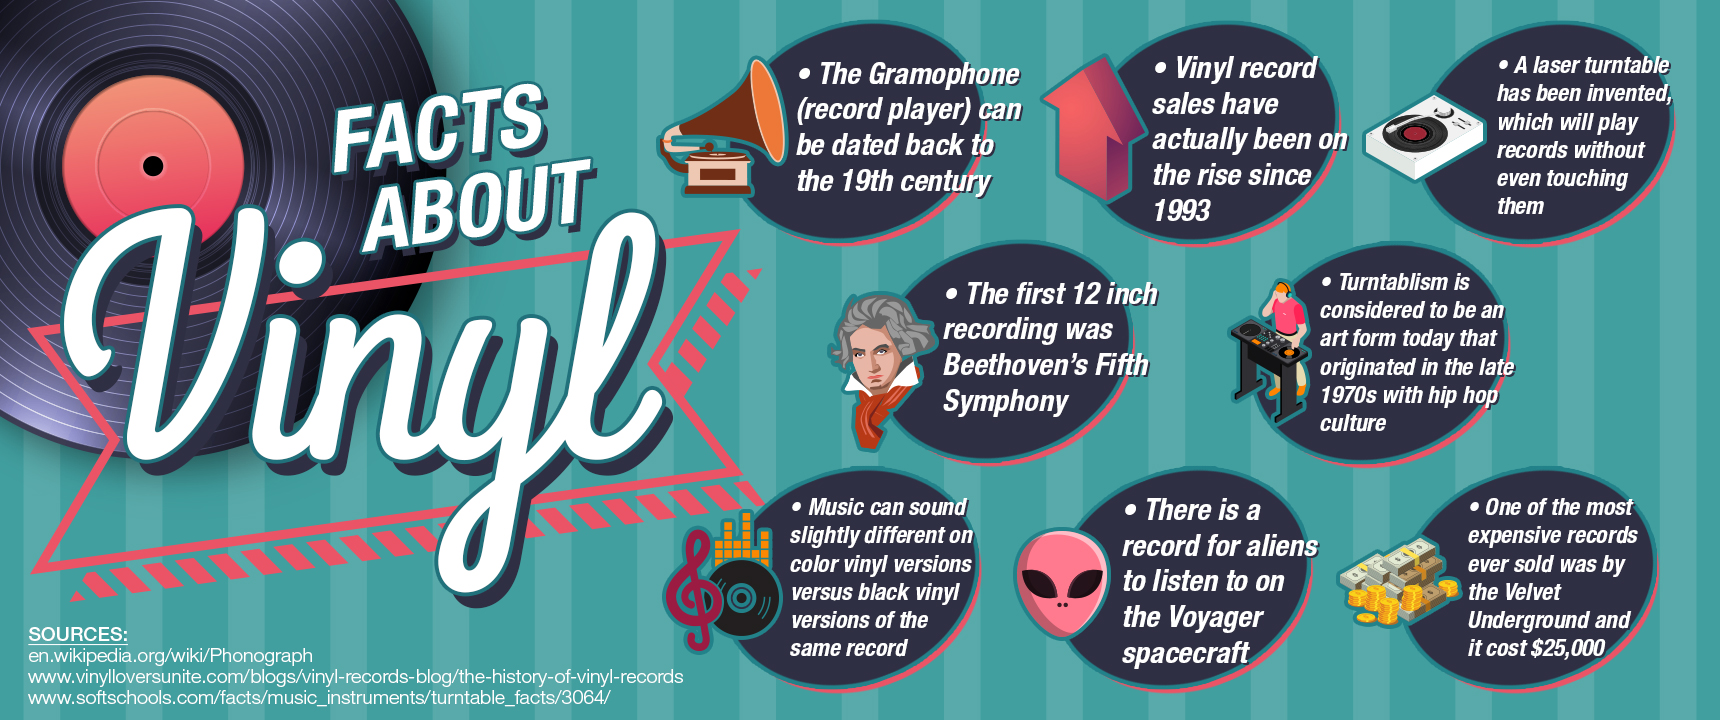 Vinyl fun facts infographic